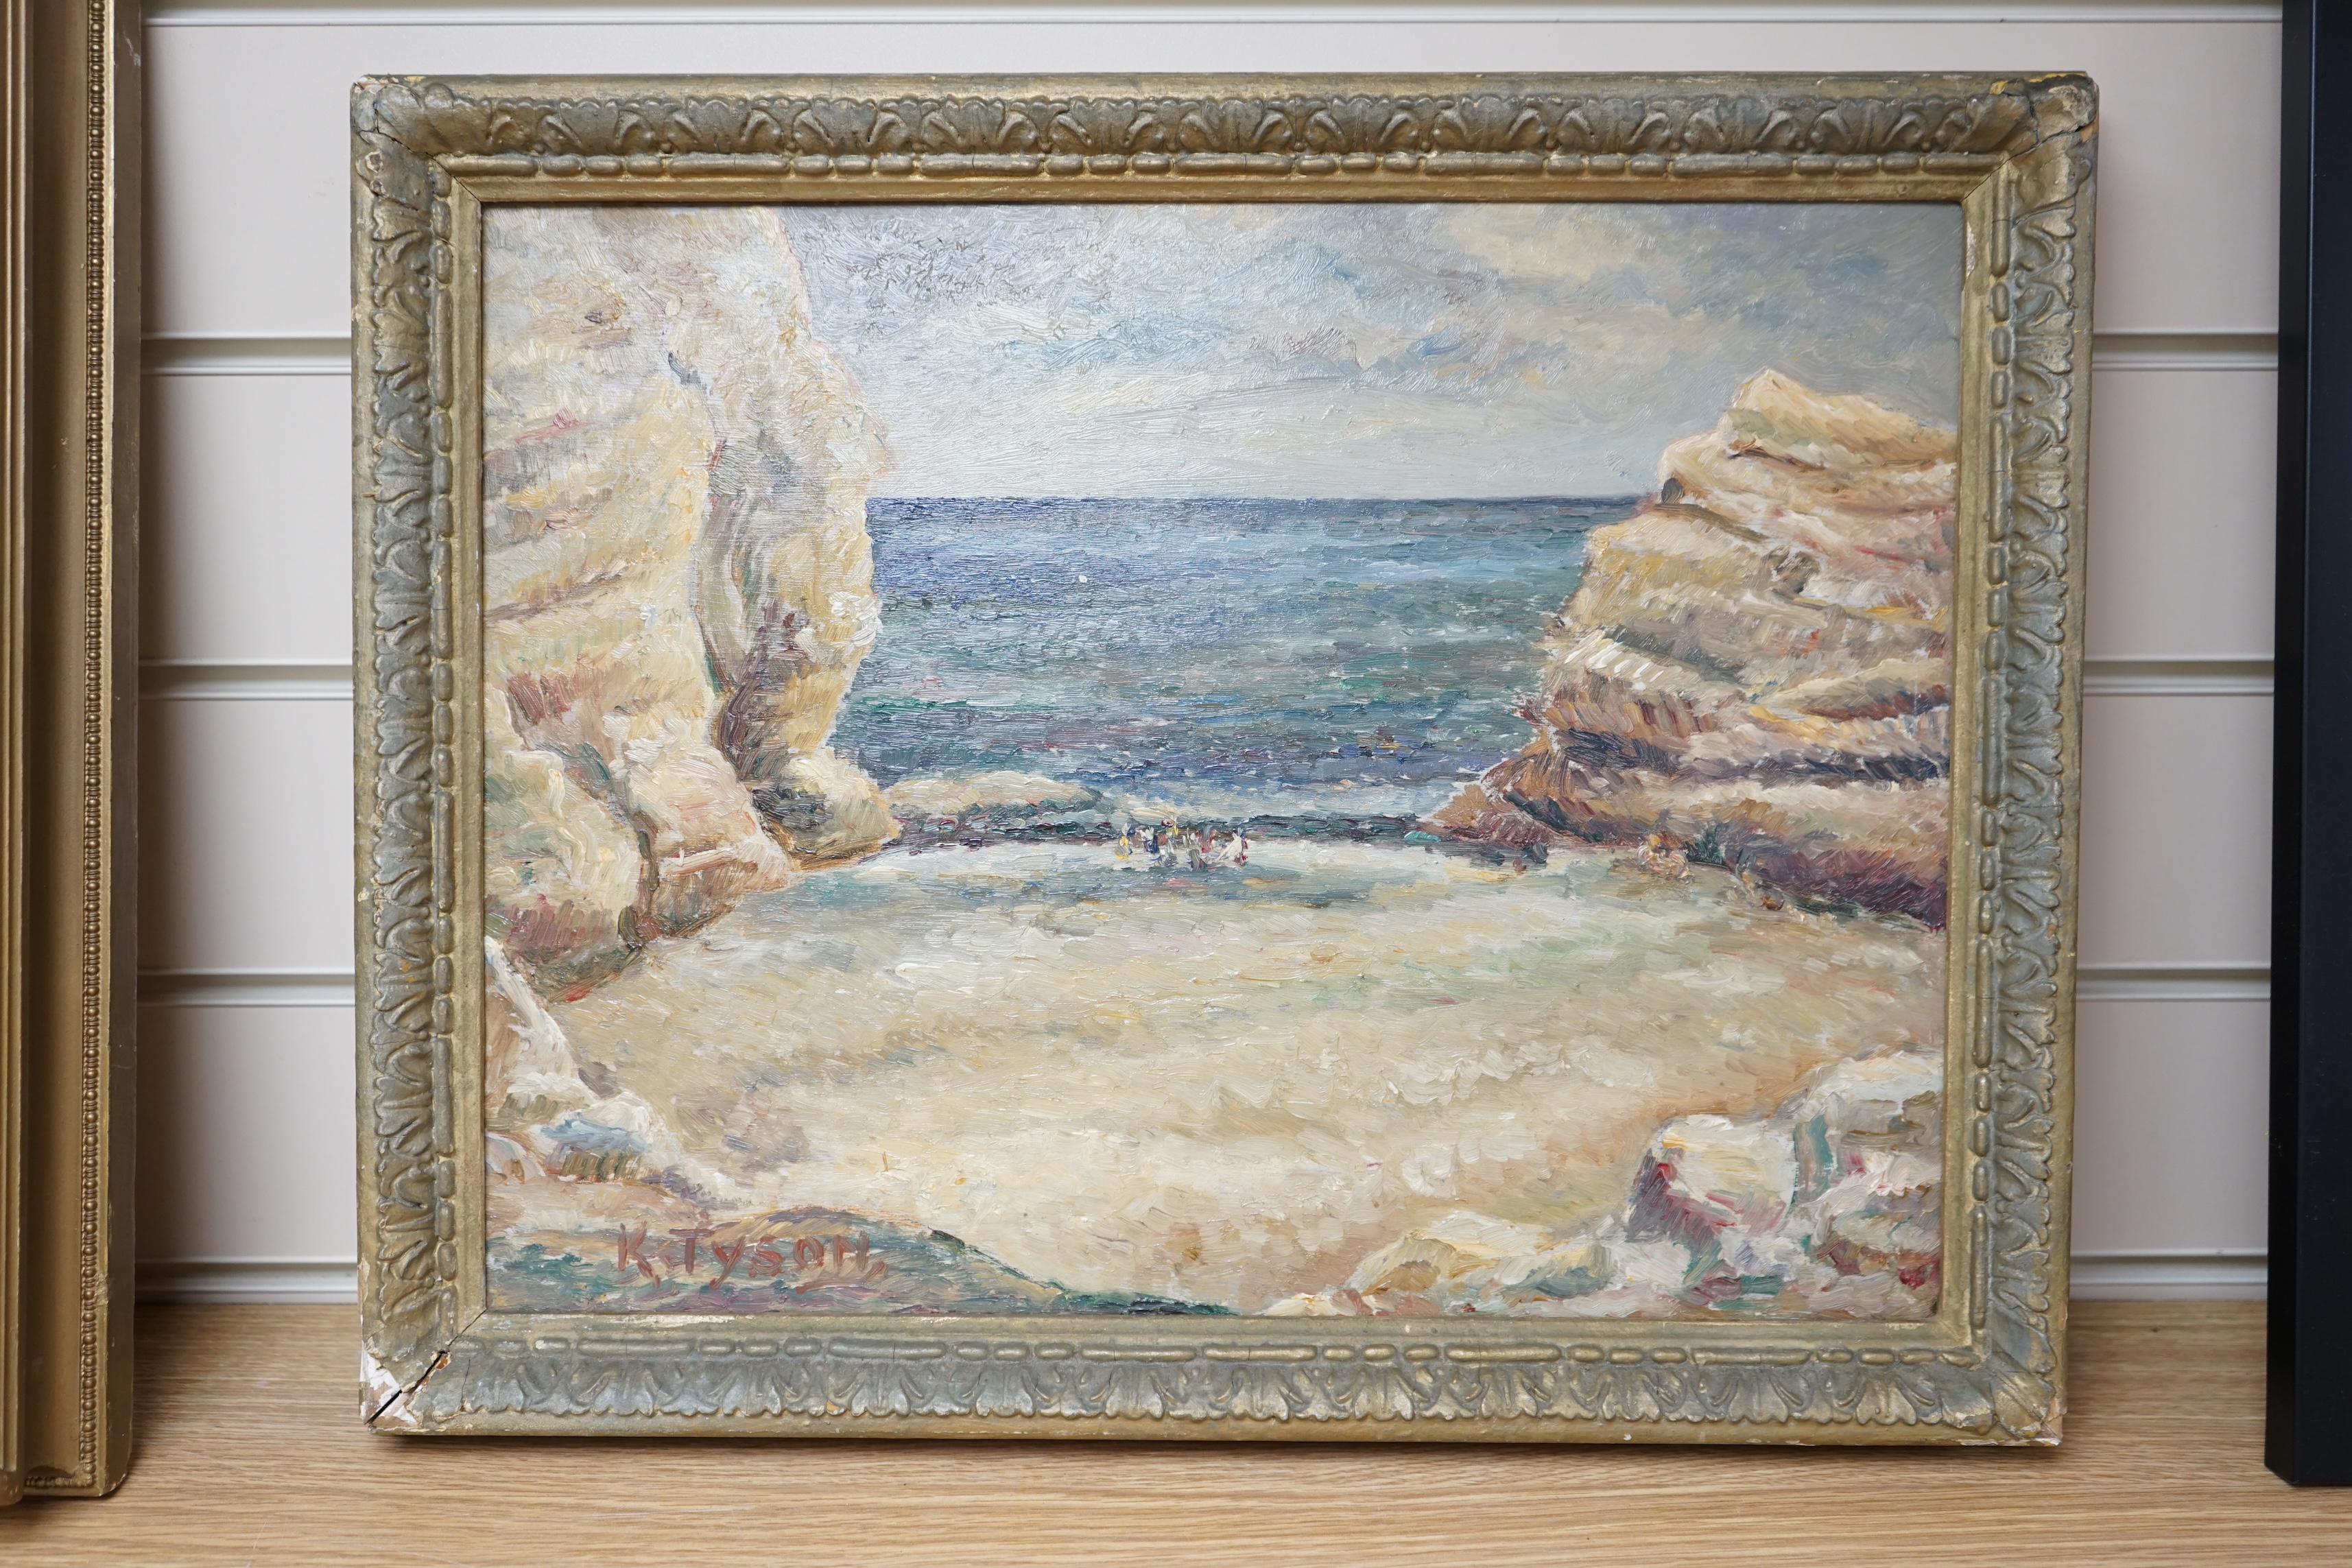 Kathleen Tyson (1898-1982), oil on board, Beach scene with figures, signed, 32 x 42cm. Condition - fair to good